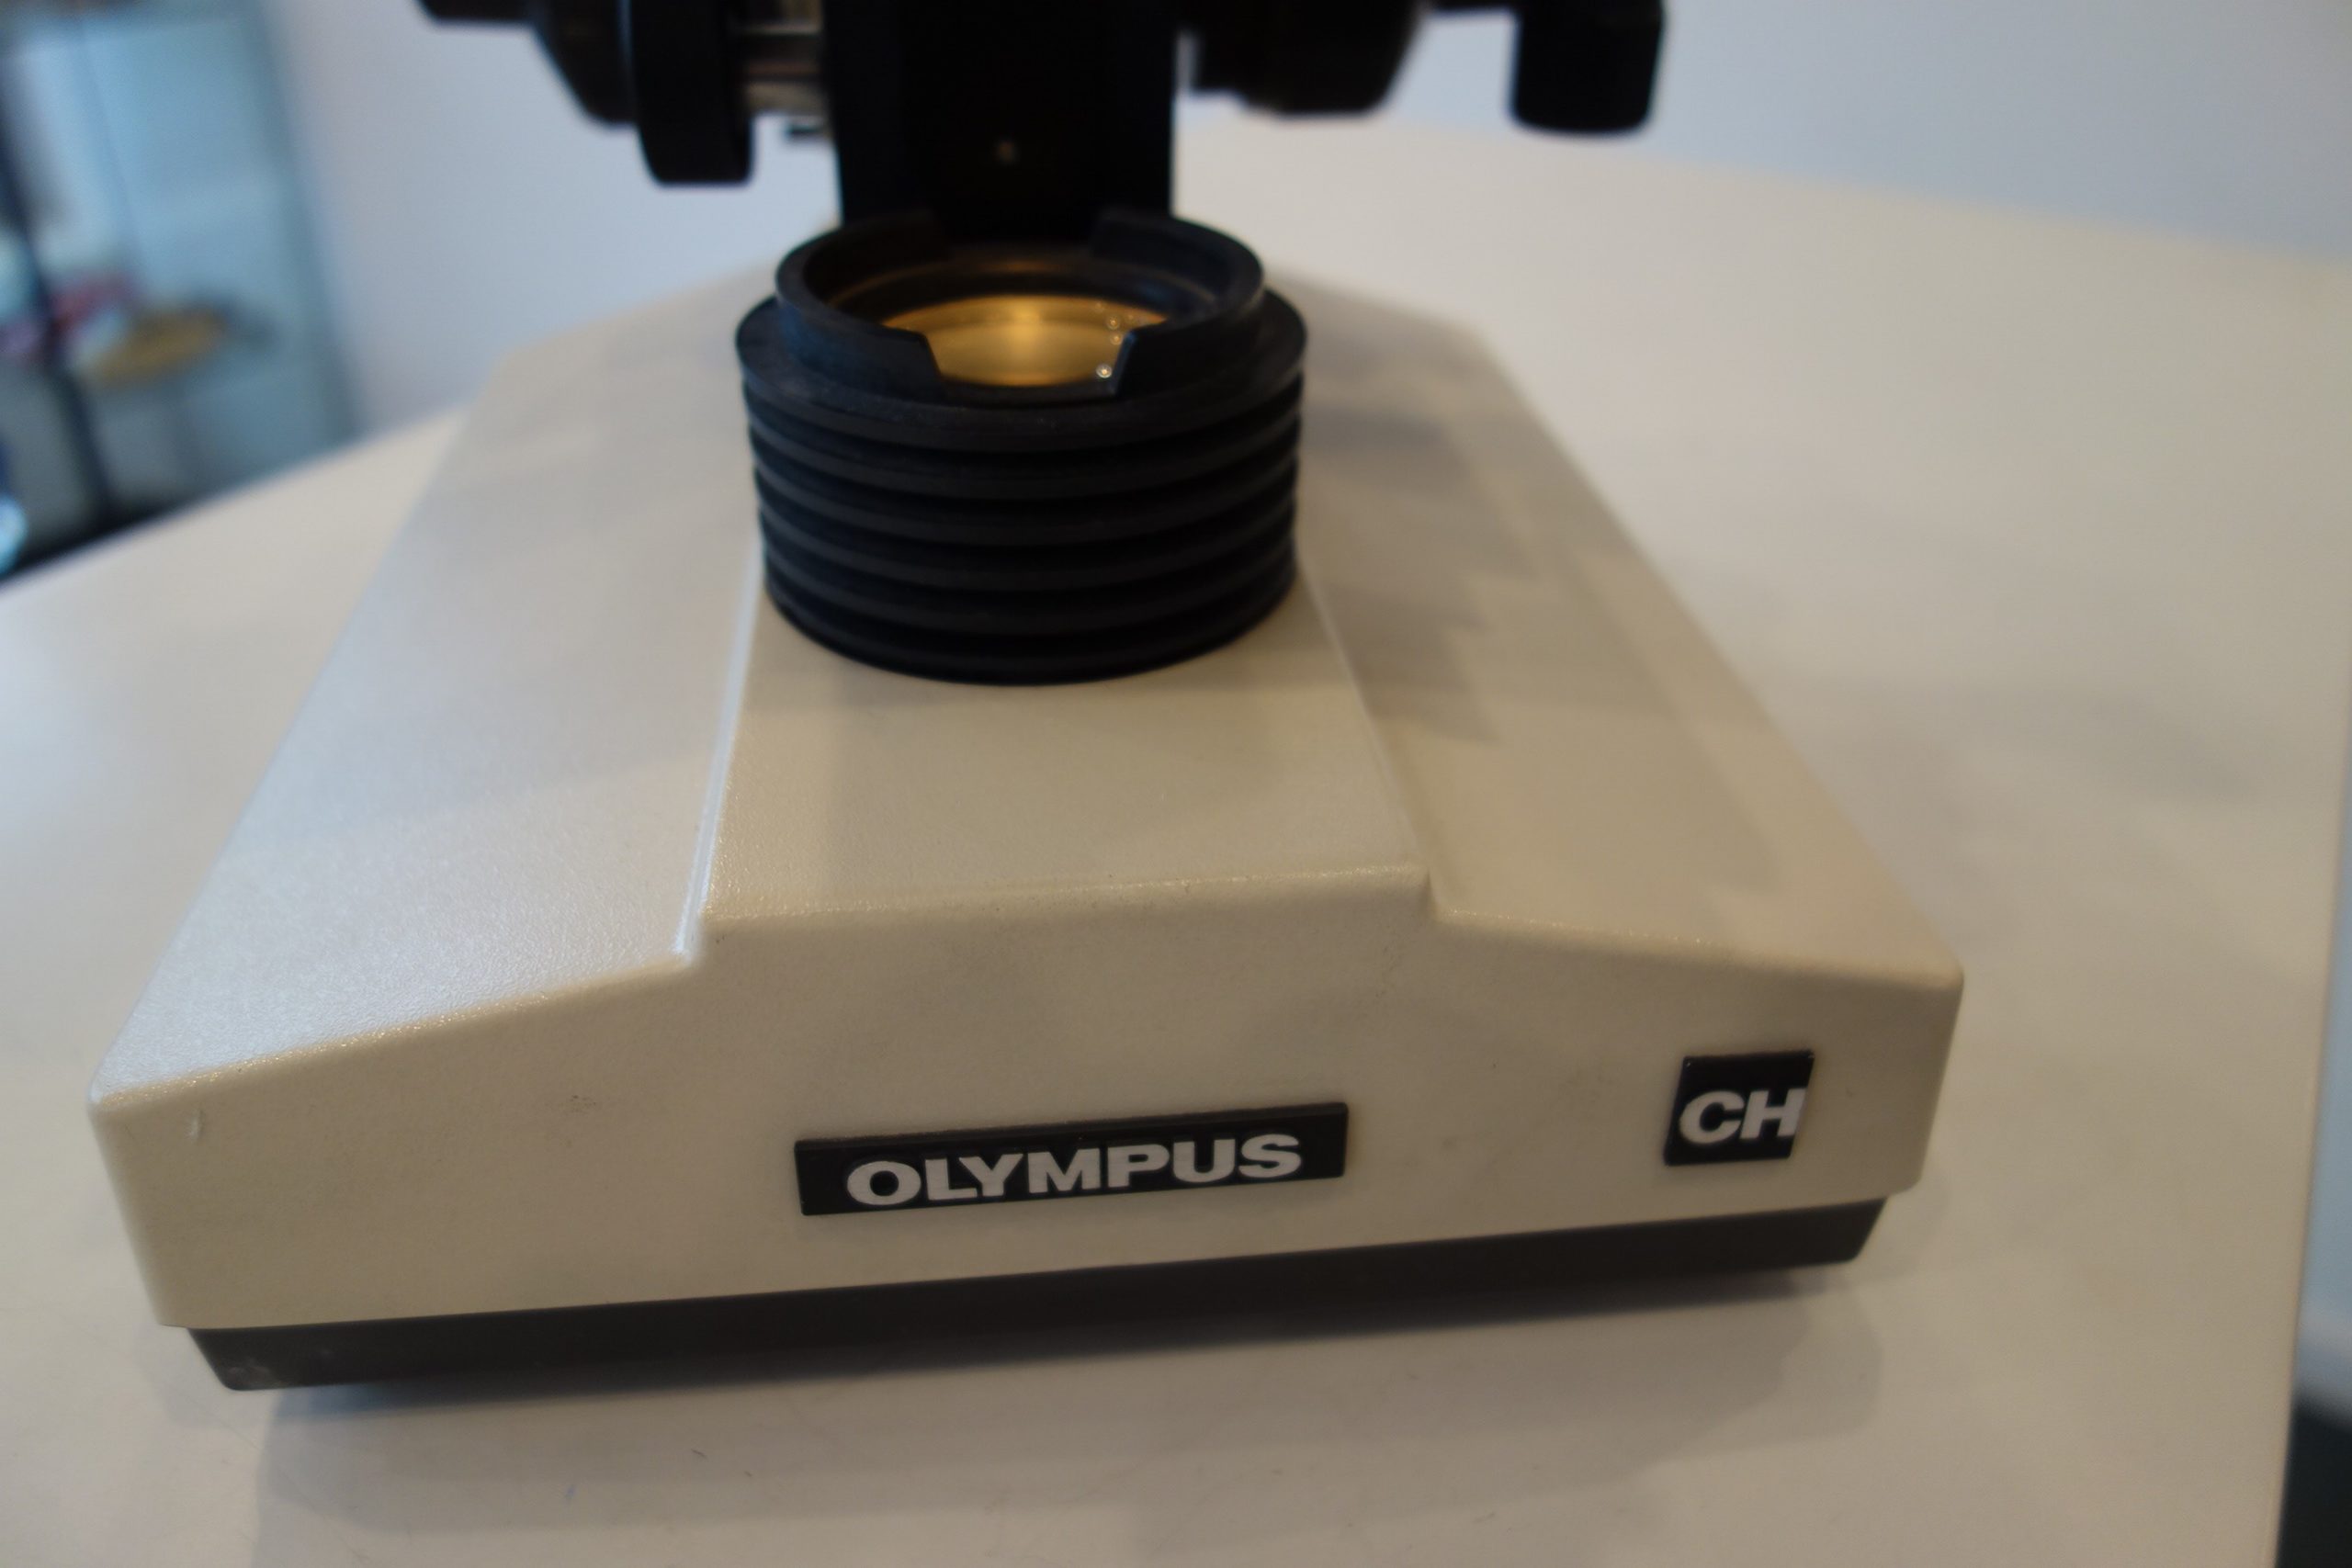 olympus-chb-tischmikroskop-binokular-3950